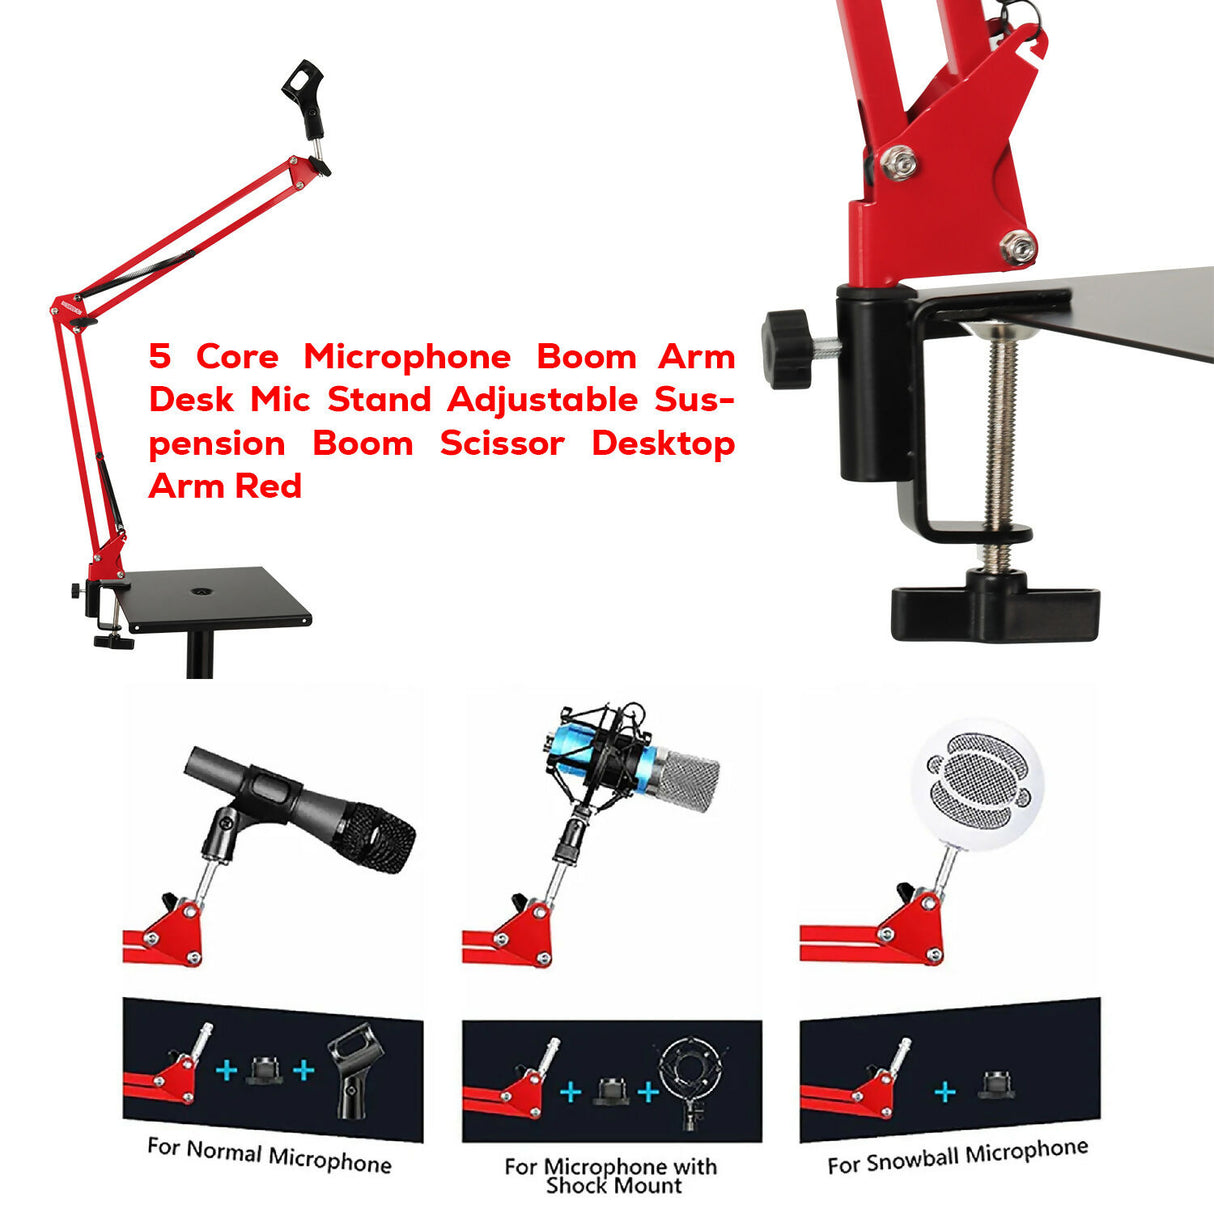 5 Core Microphone Boom Arm Desk Mic Stand Adjustable Suspension Boom Scissor Desktop Arm Red 1/2 Pc